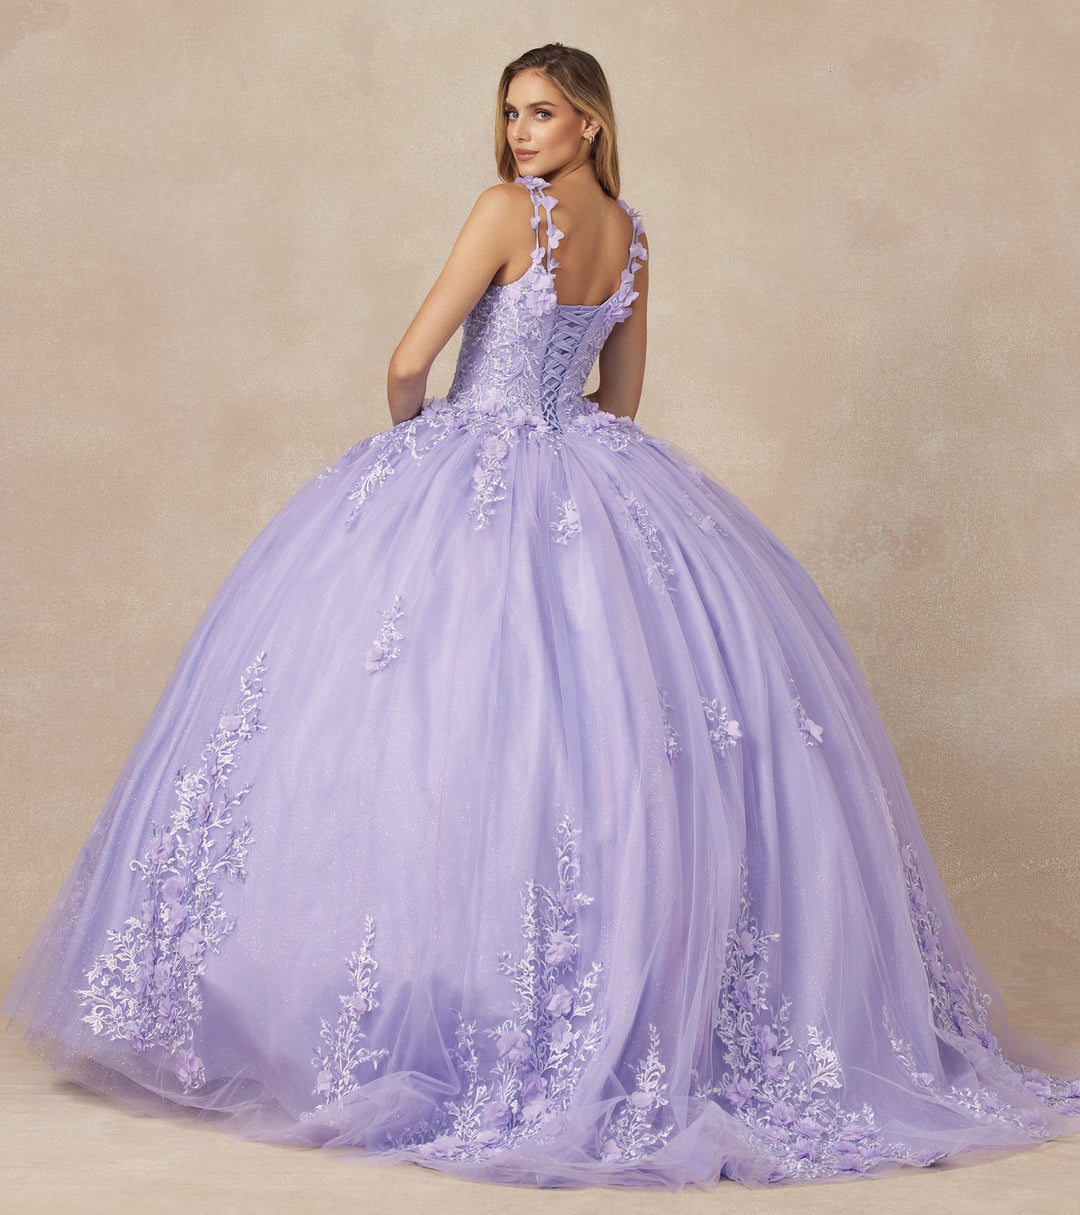 3D Floral Sleeveless Ball Gown by Juliet 1437